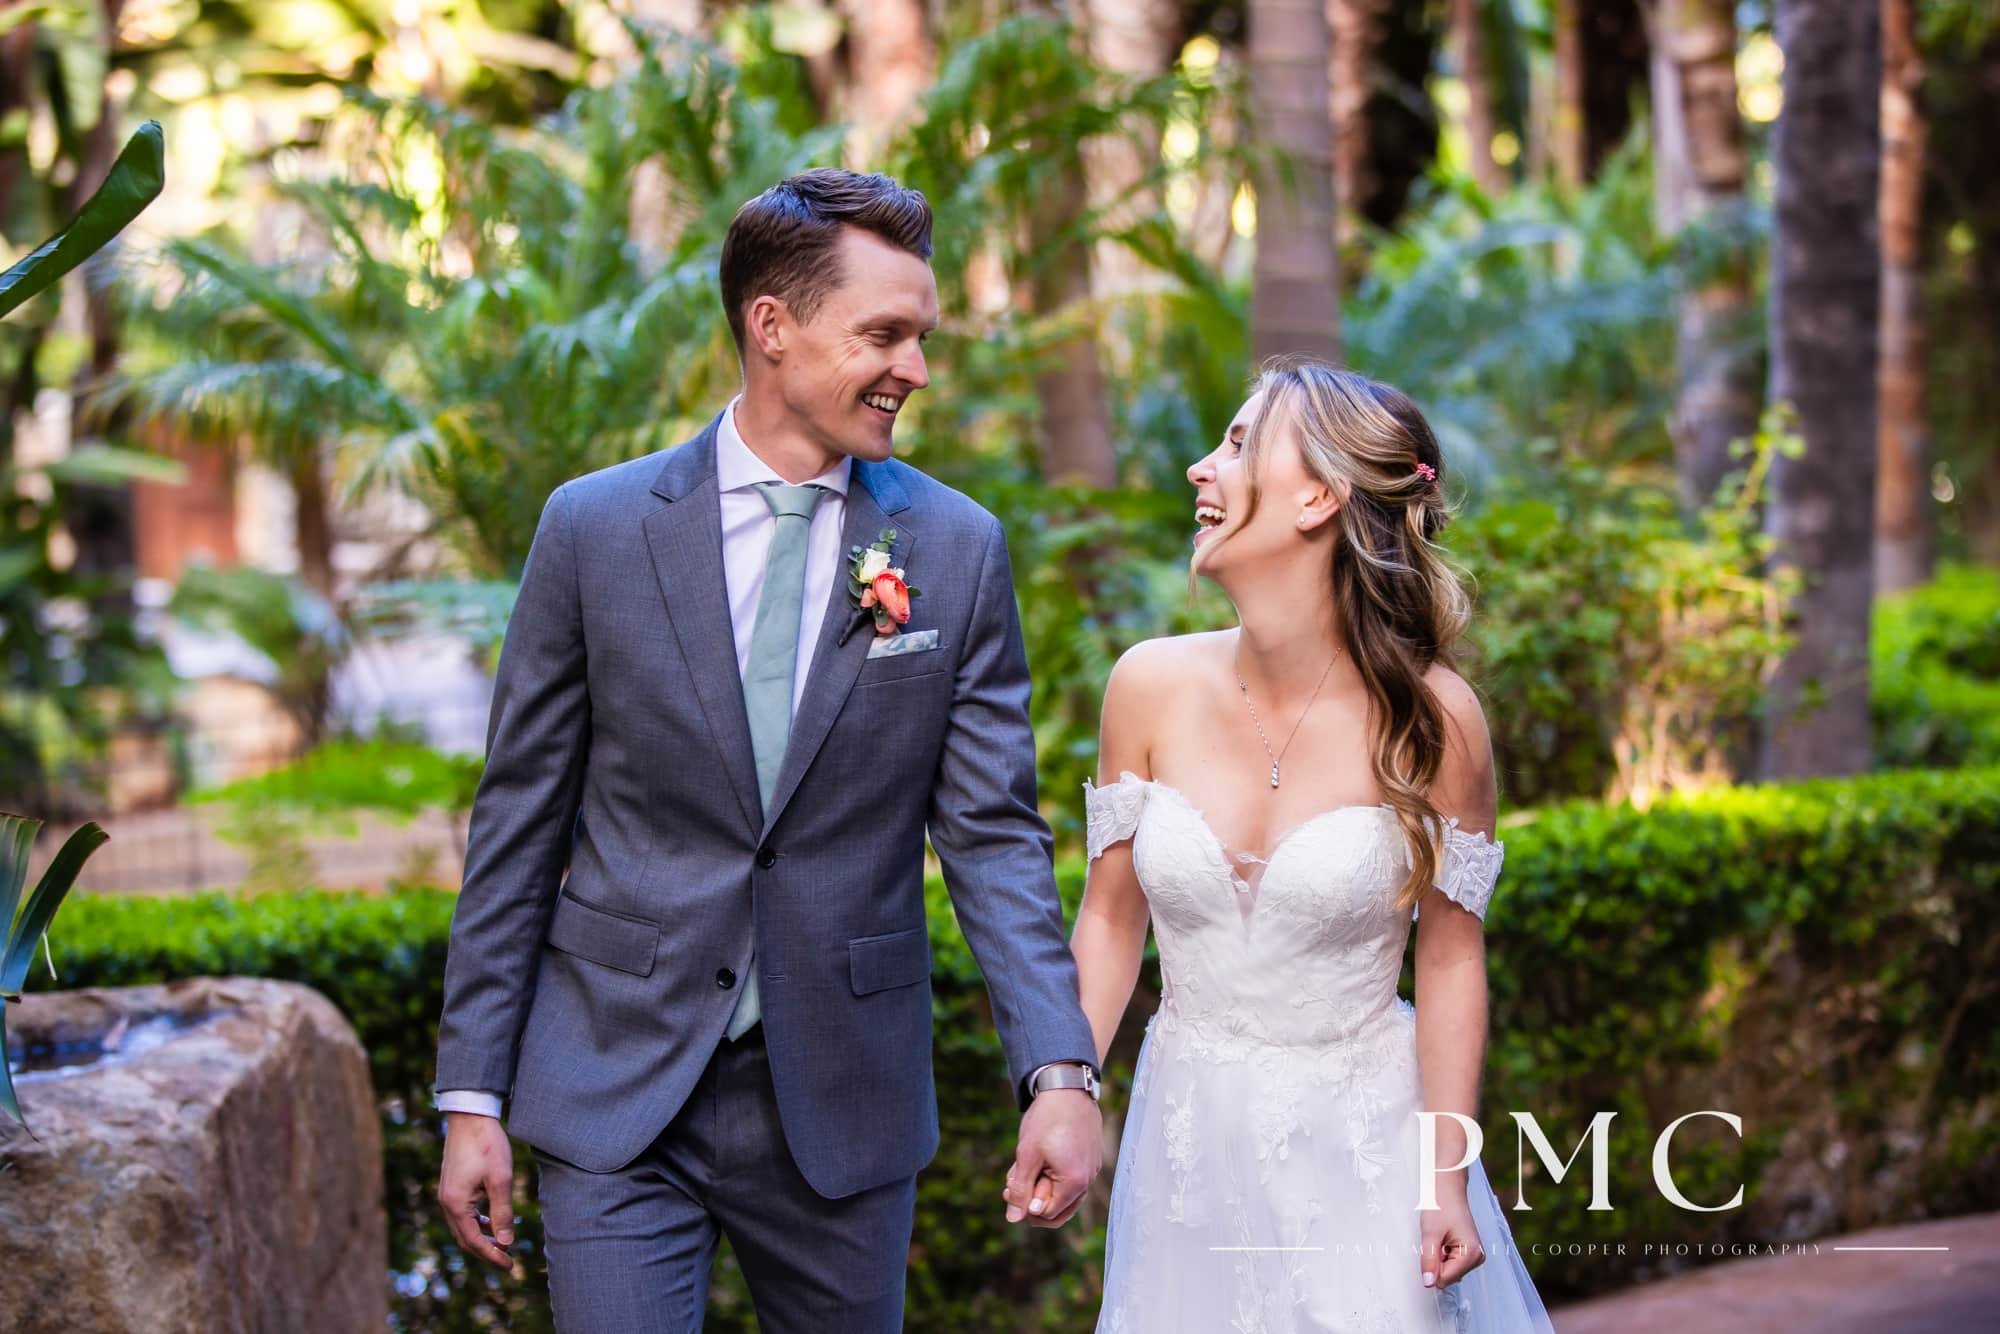 Grand Tradition Estate - Fallbrook Wedding - Best San Diego Wedding Photographer-45.jpg